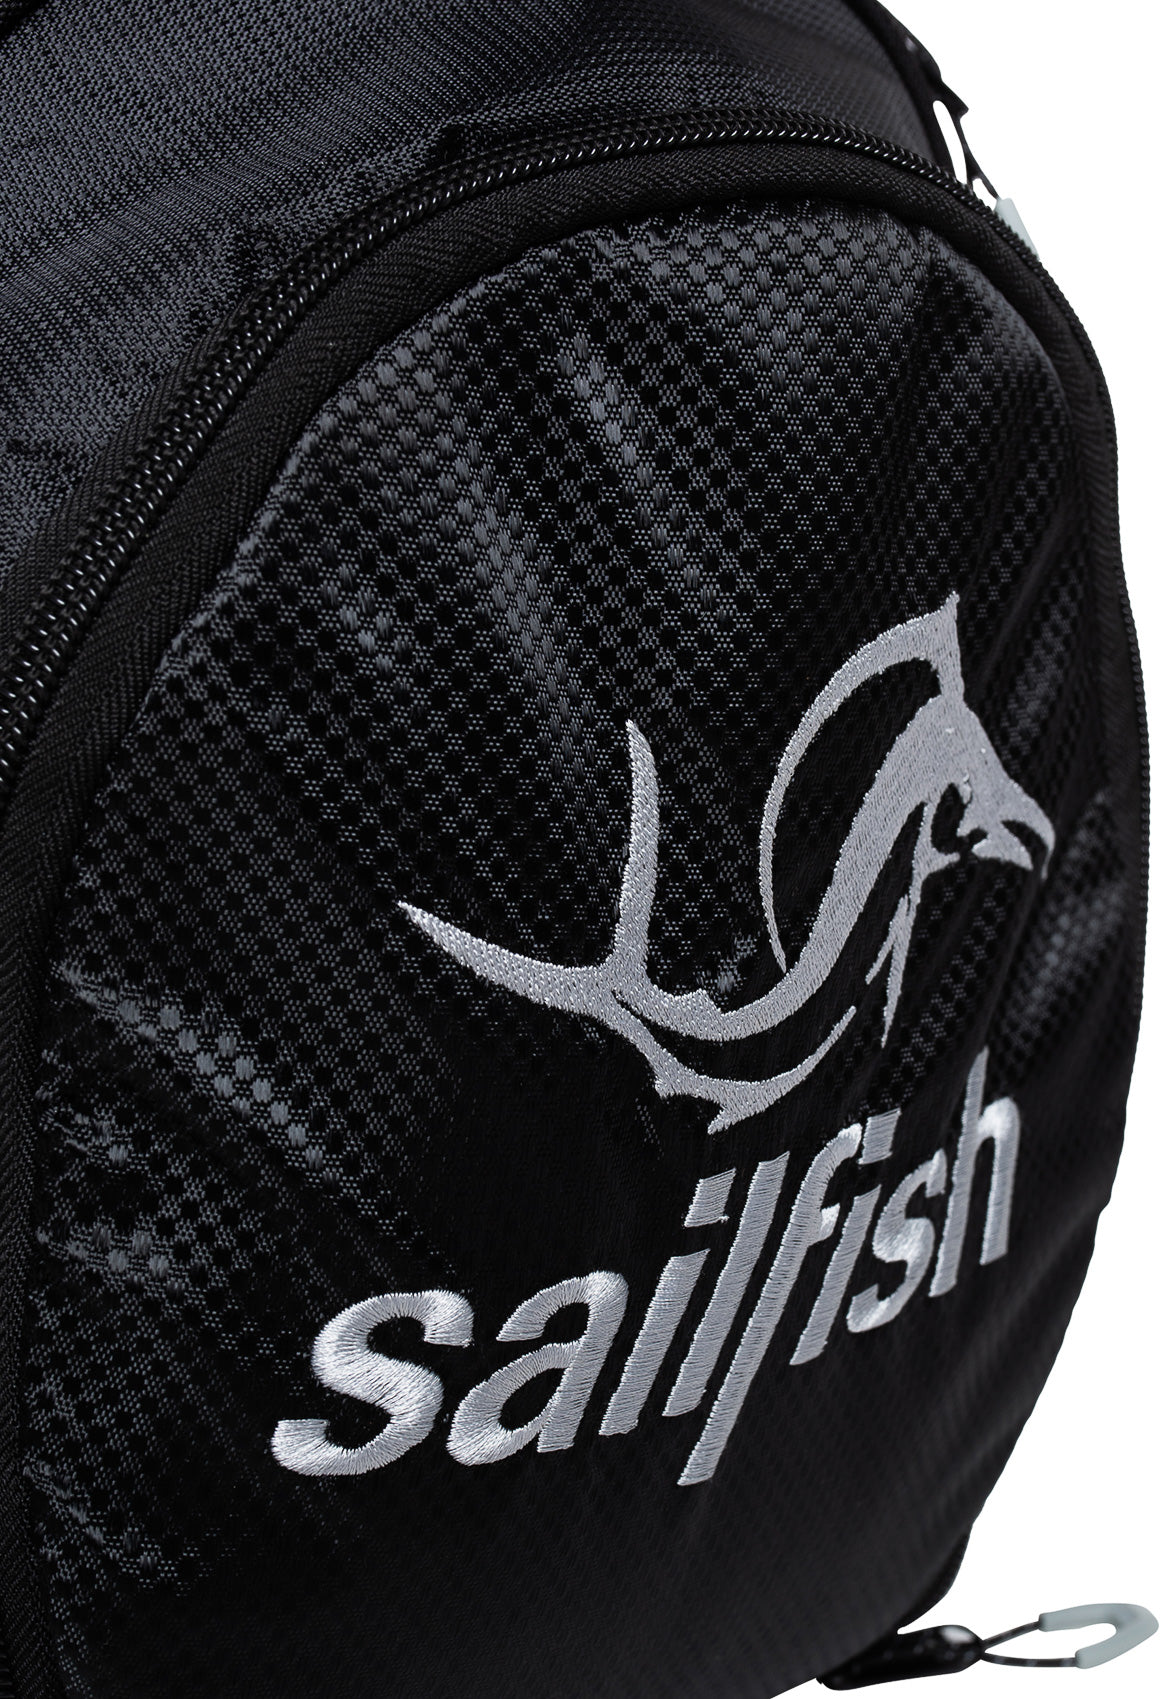 sailfish Transition Backpack Kona